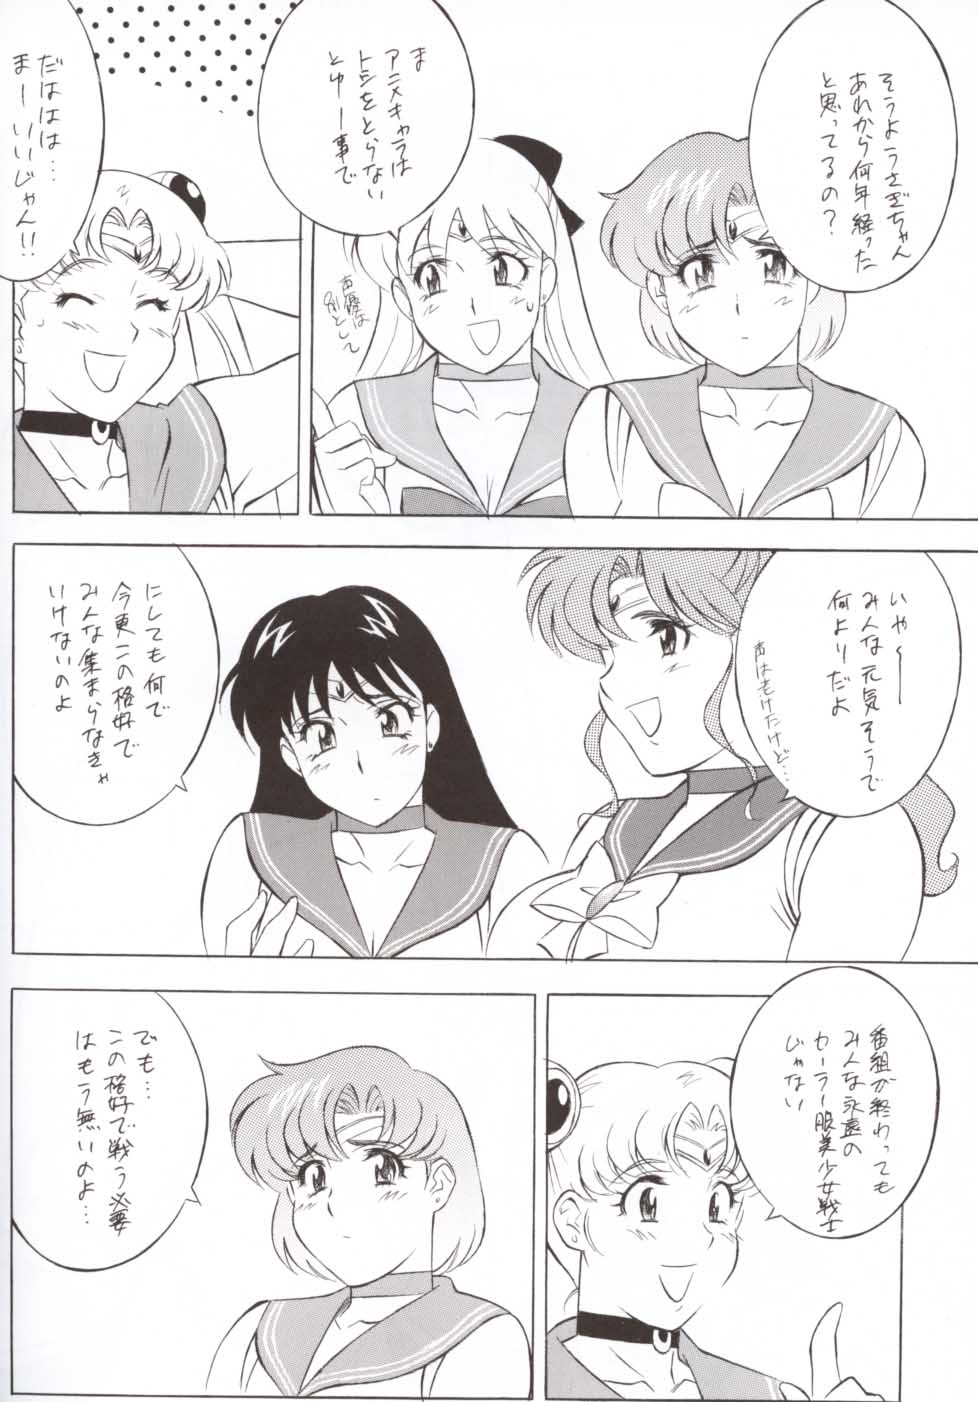 Next - Climax Magazine 12 [Sailor Moon] 